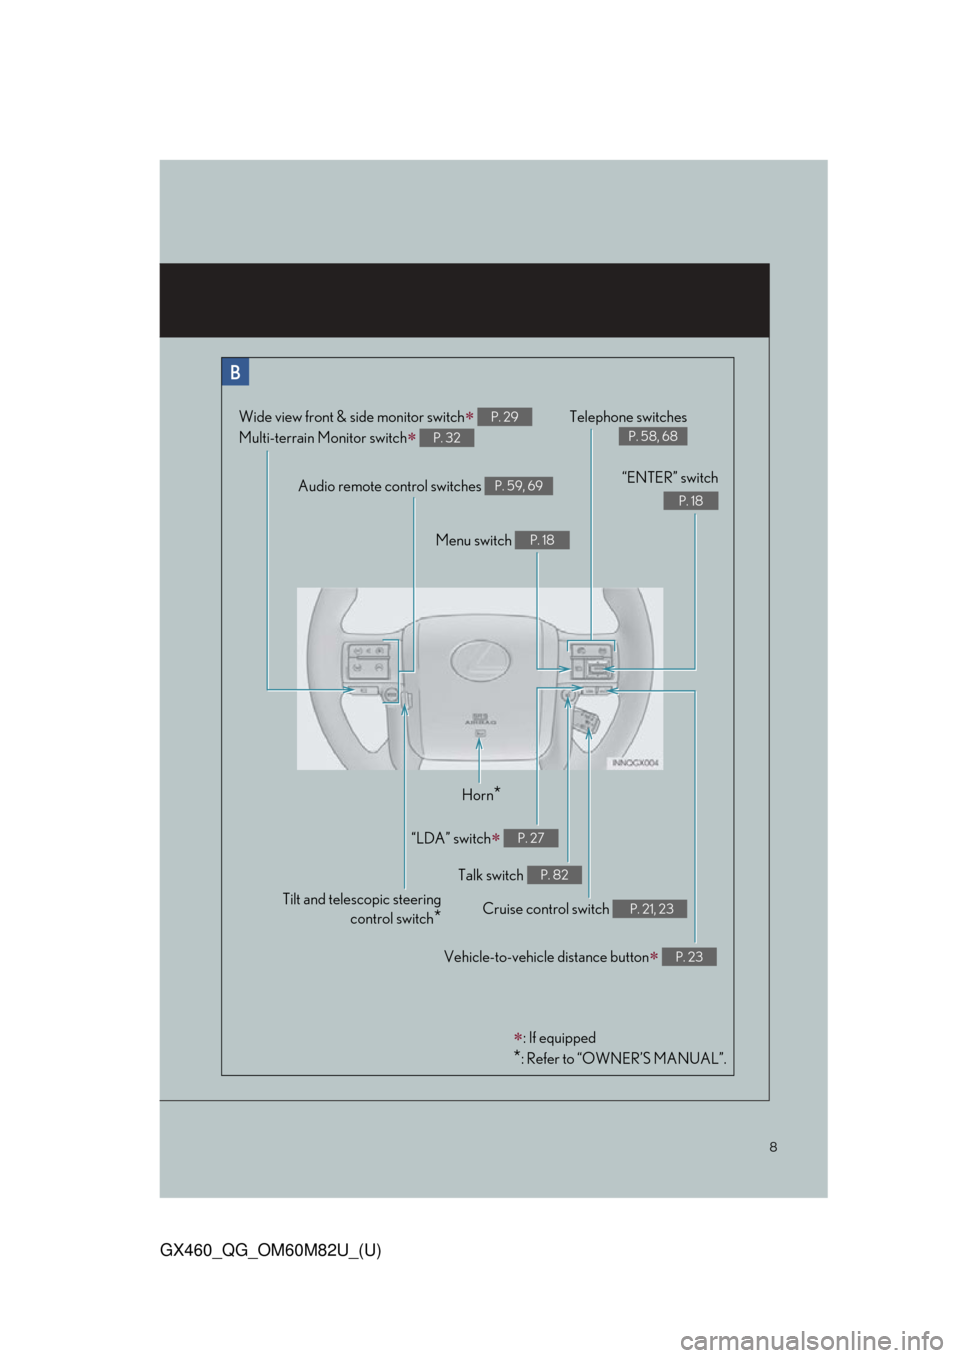 Lexus GX460 2016  Multimedia Manual / 8
GX460_QG_OM60M82U_(U)
Audio remote control switches P. 59, 69
Telephone switches
P. 58, 68
Menu switch P. 18
“ENTER” switch
P. 18
Wide view front & side monitor switch 
Multi-terrain Monitor 